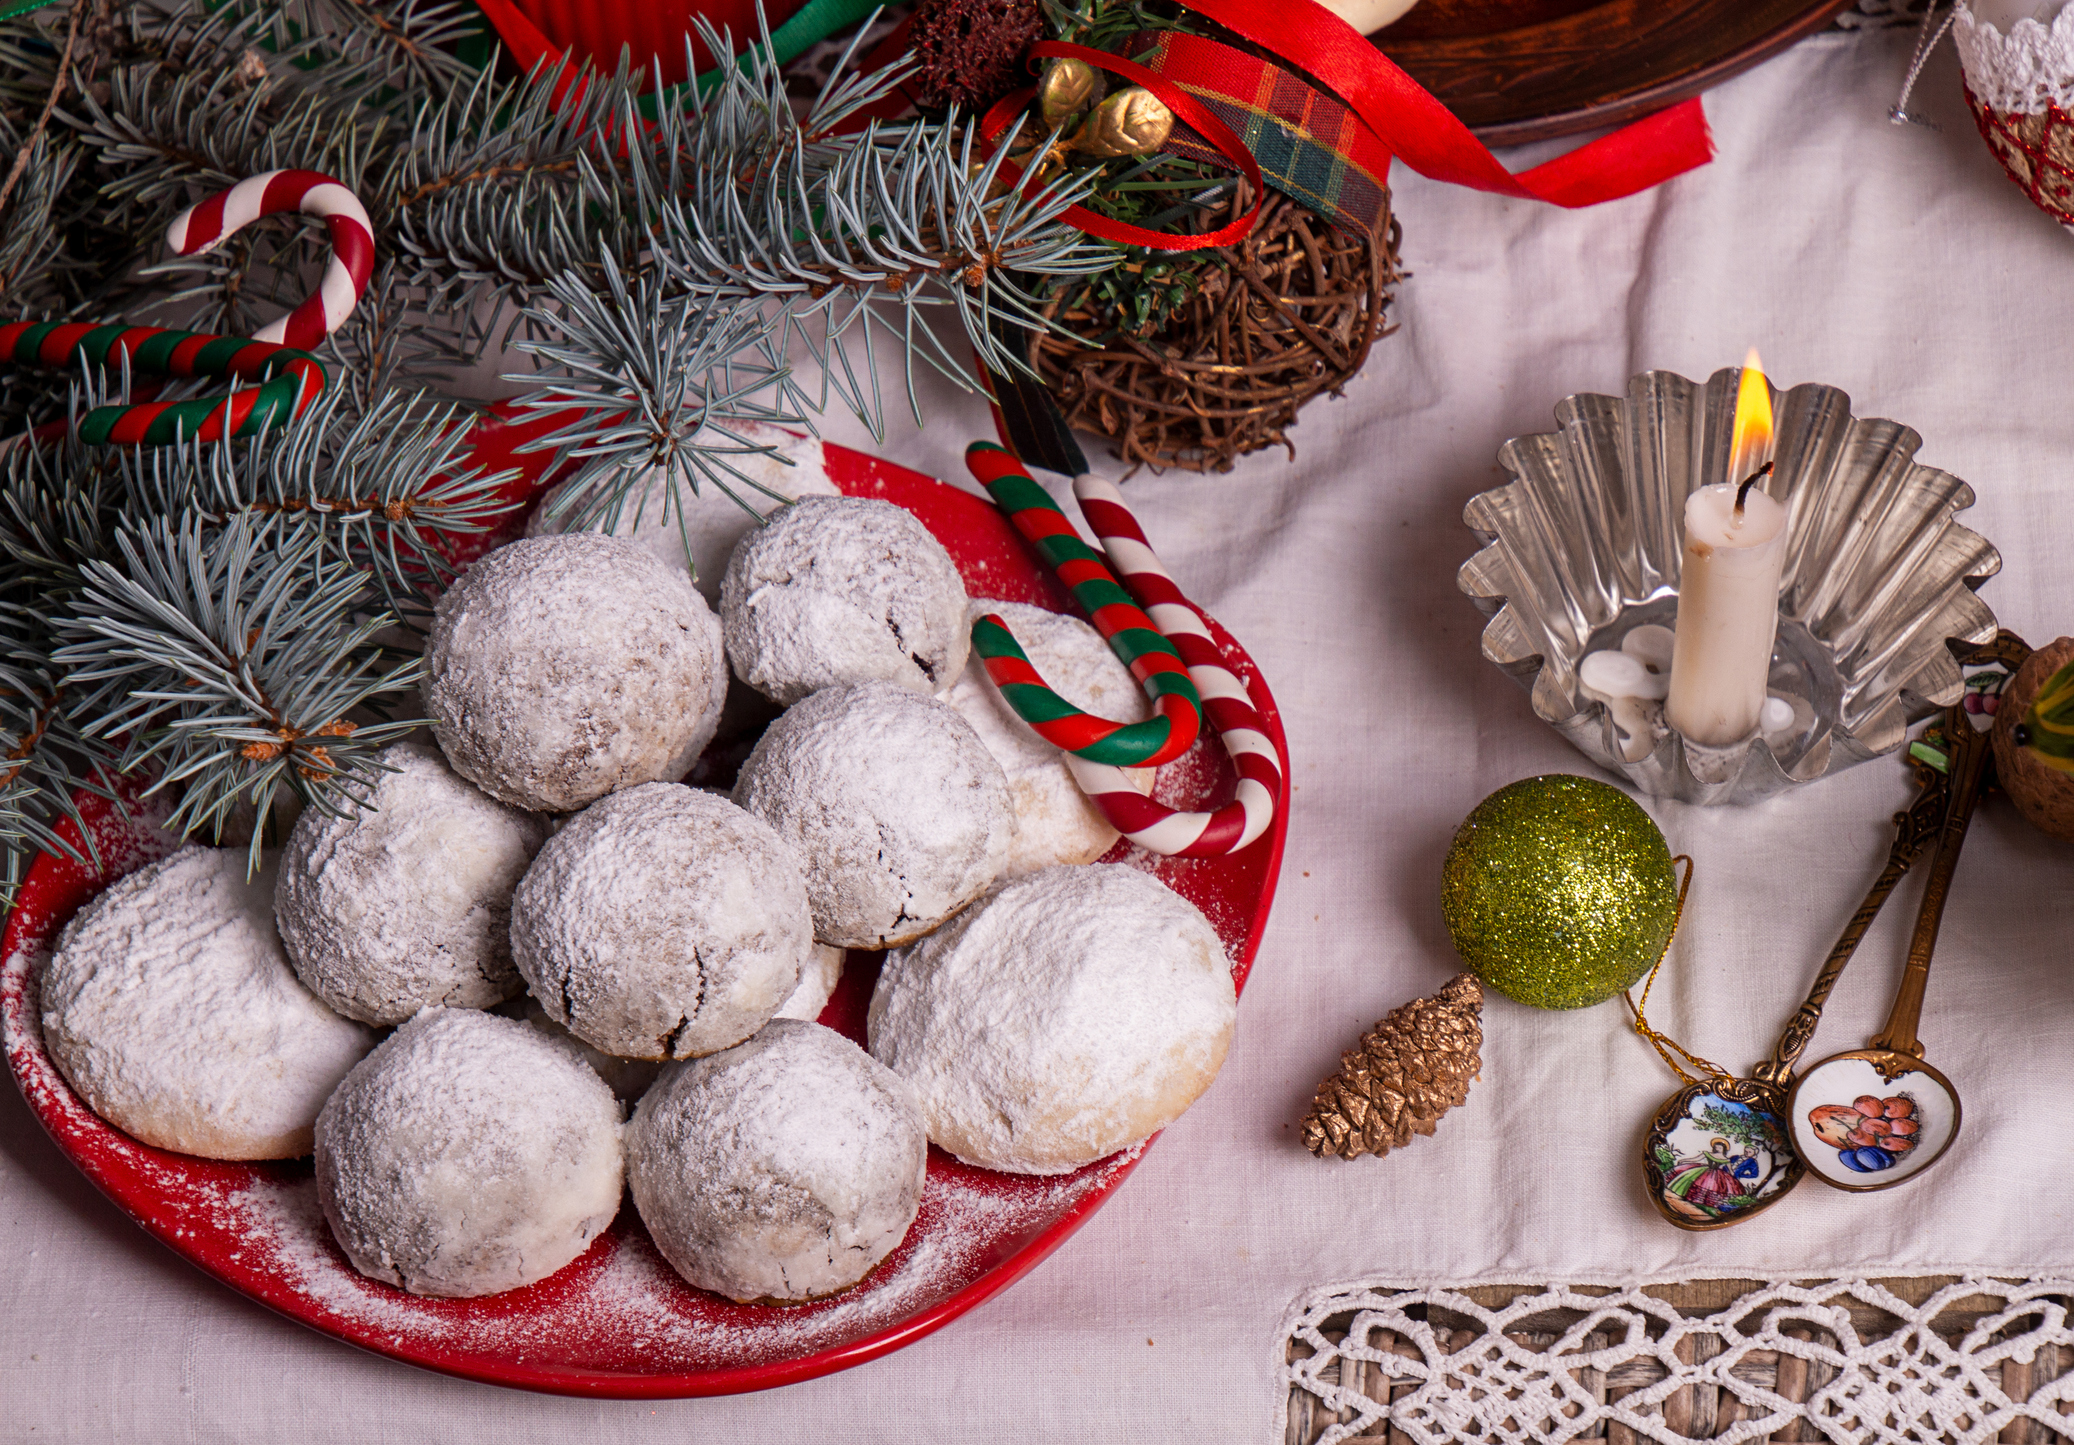 10. Snowball Cookies